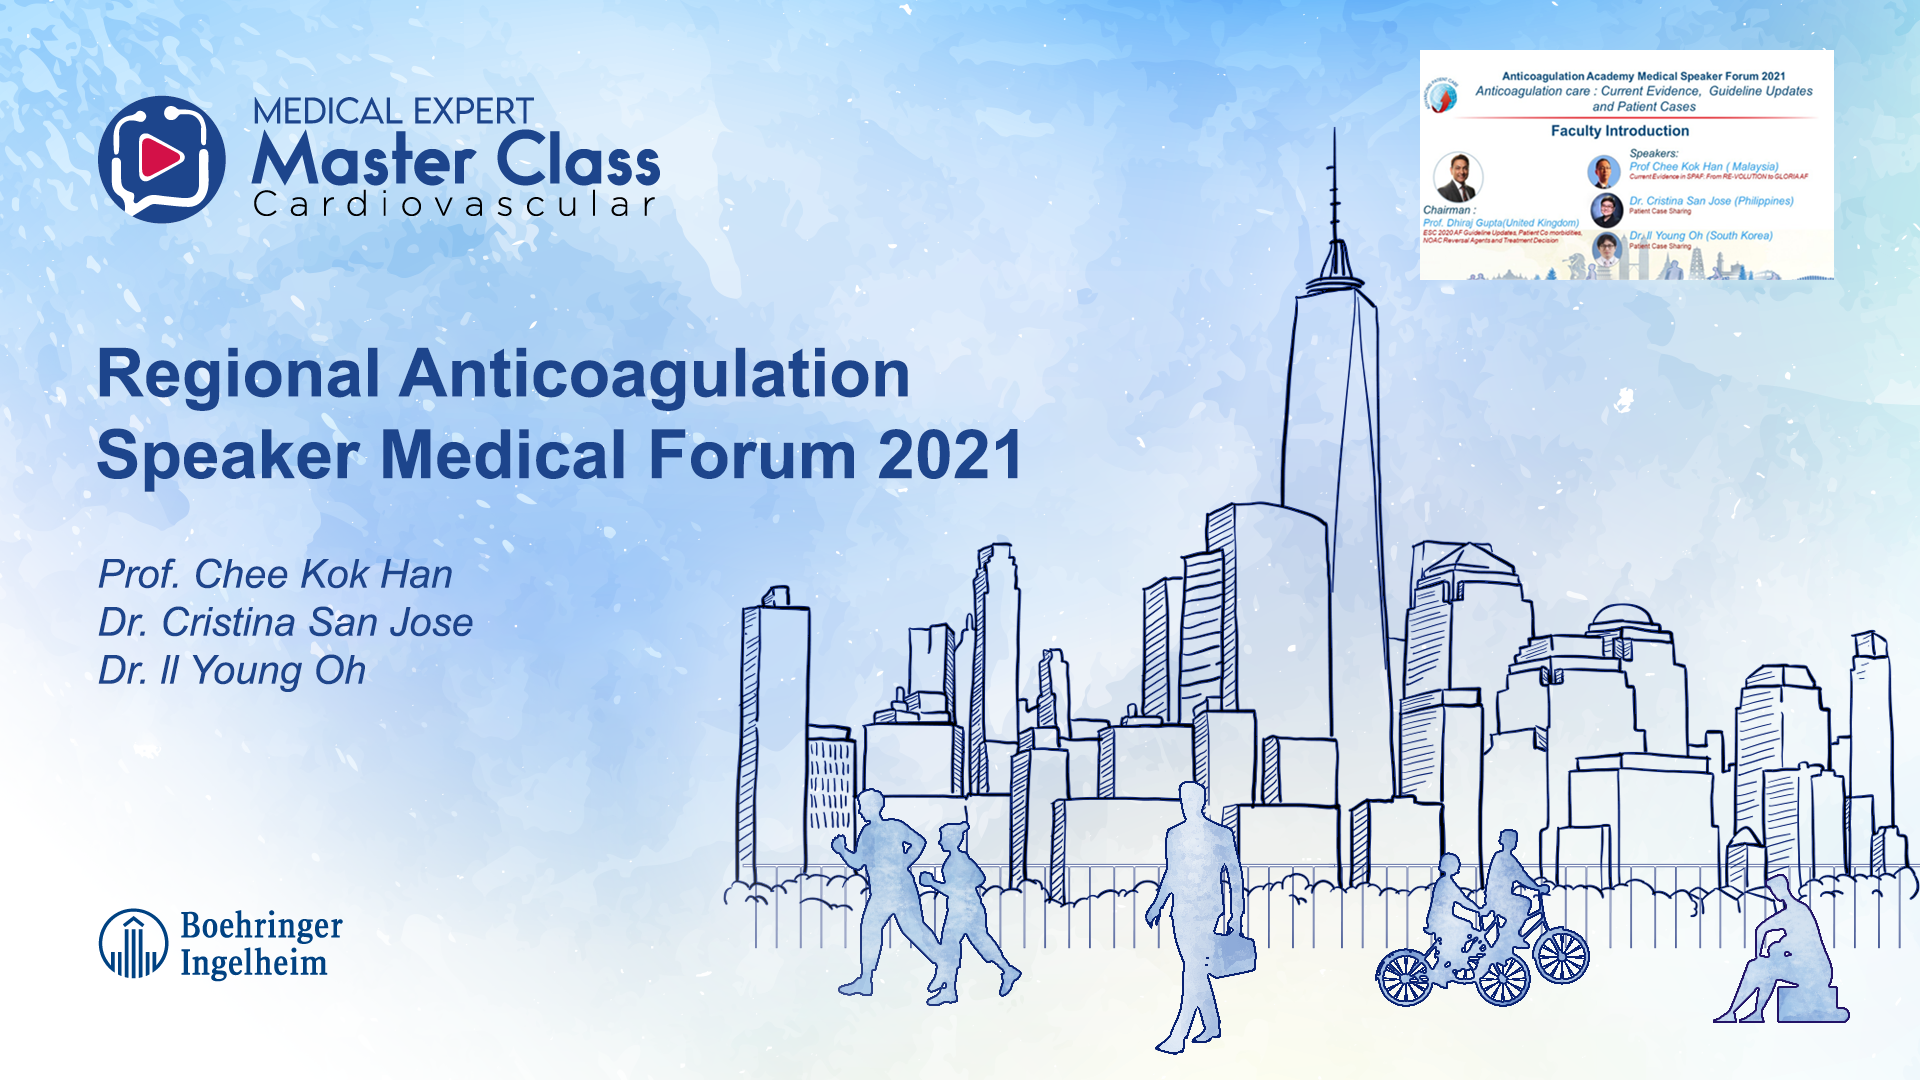 Regional Anticoagulation Speaker Medical Forum 2021